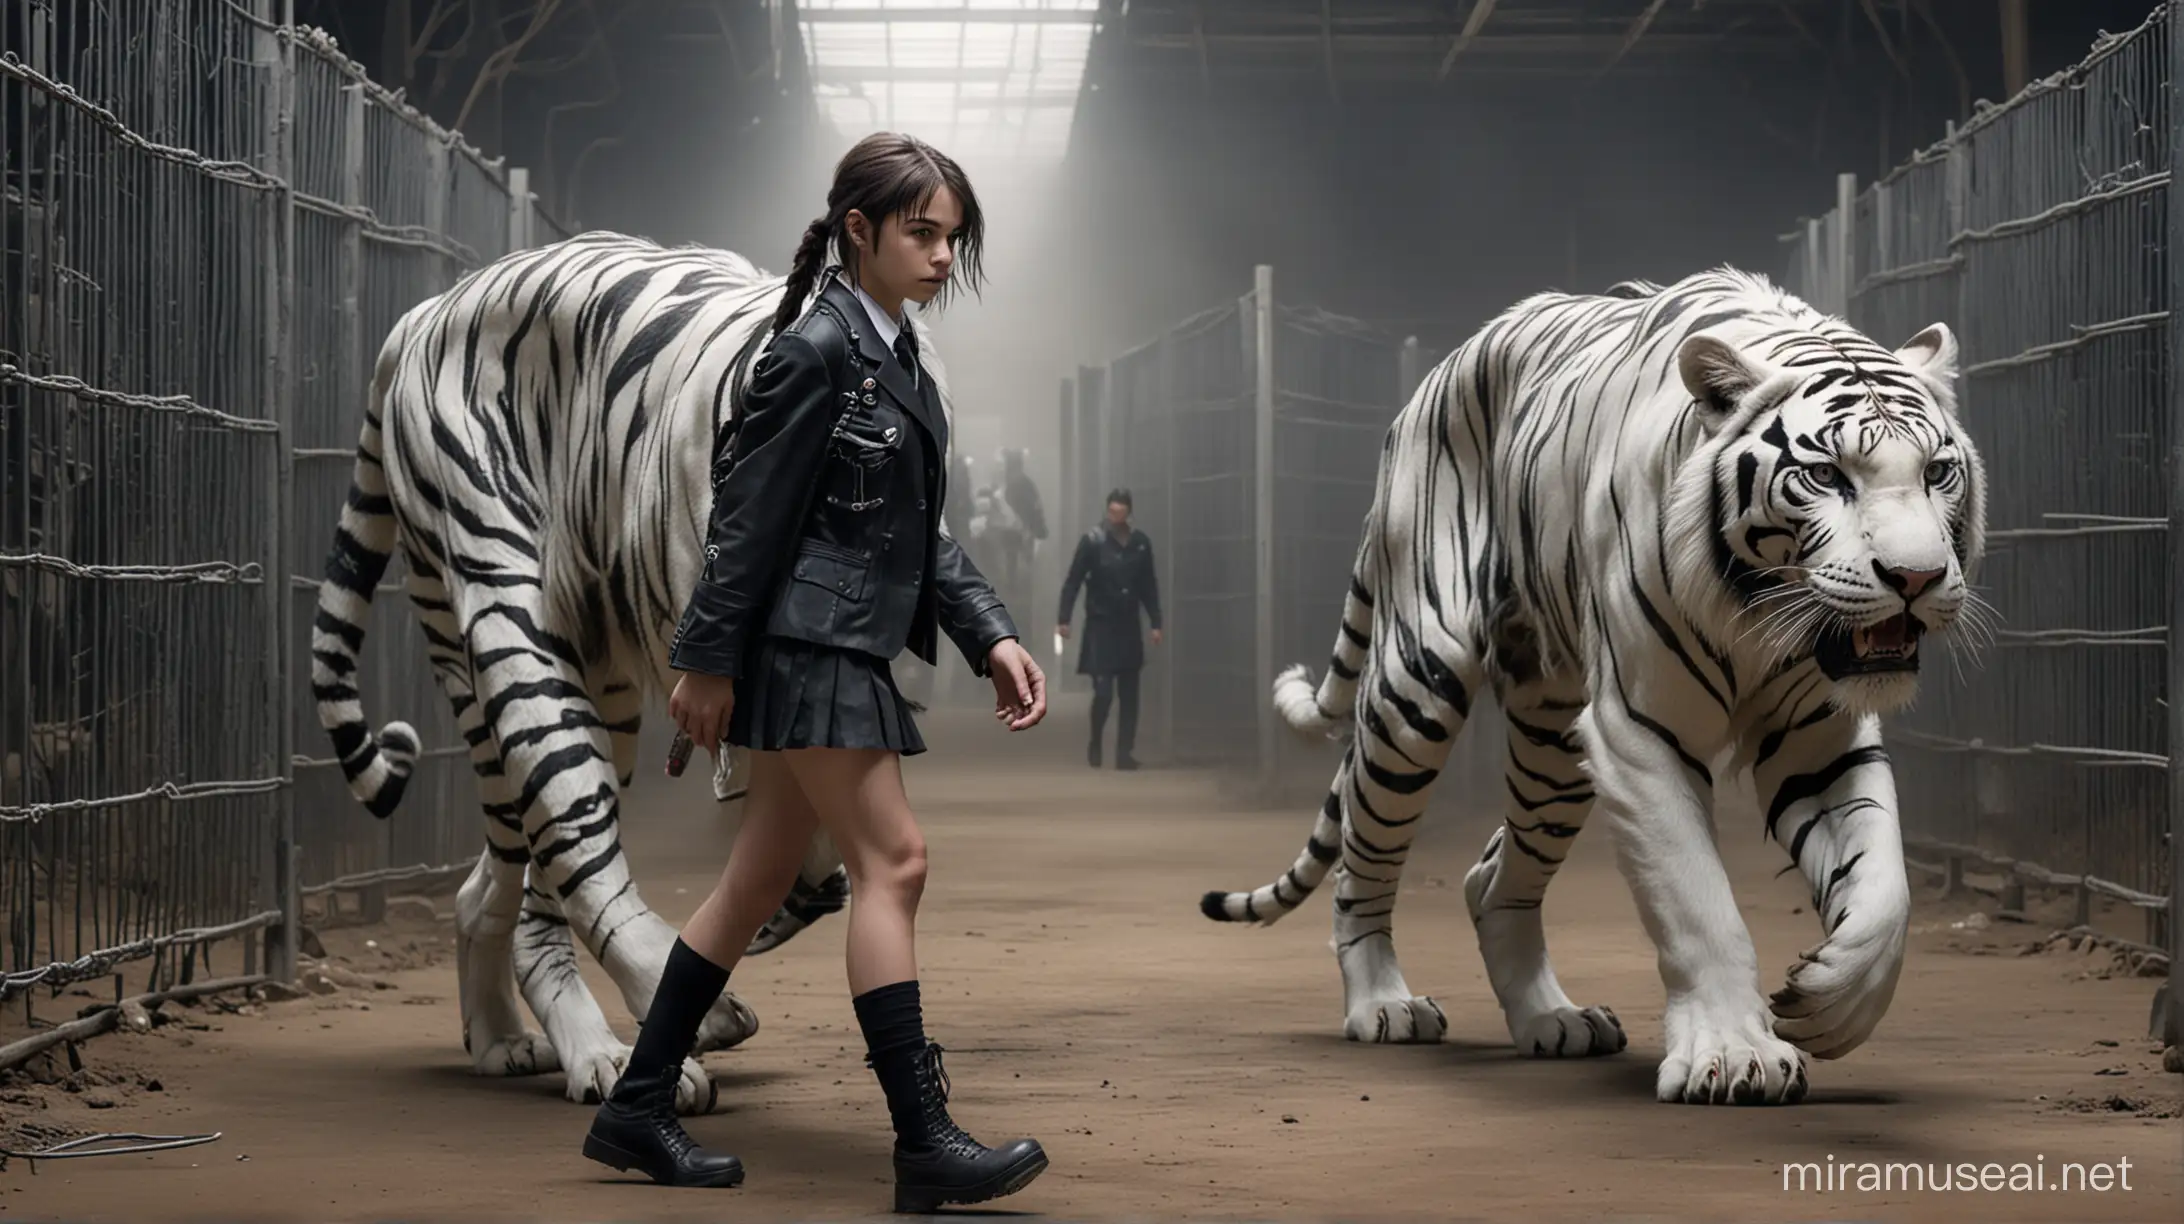 Futuristic Underground Cage Match with Punk Schoolgirl and Maltese Tiger